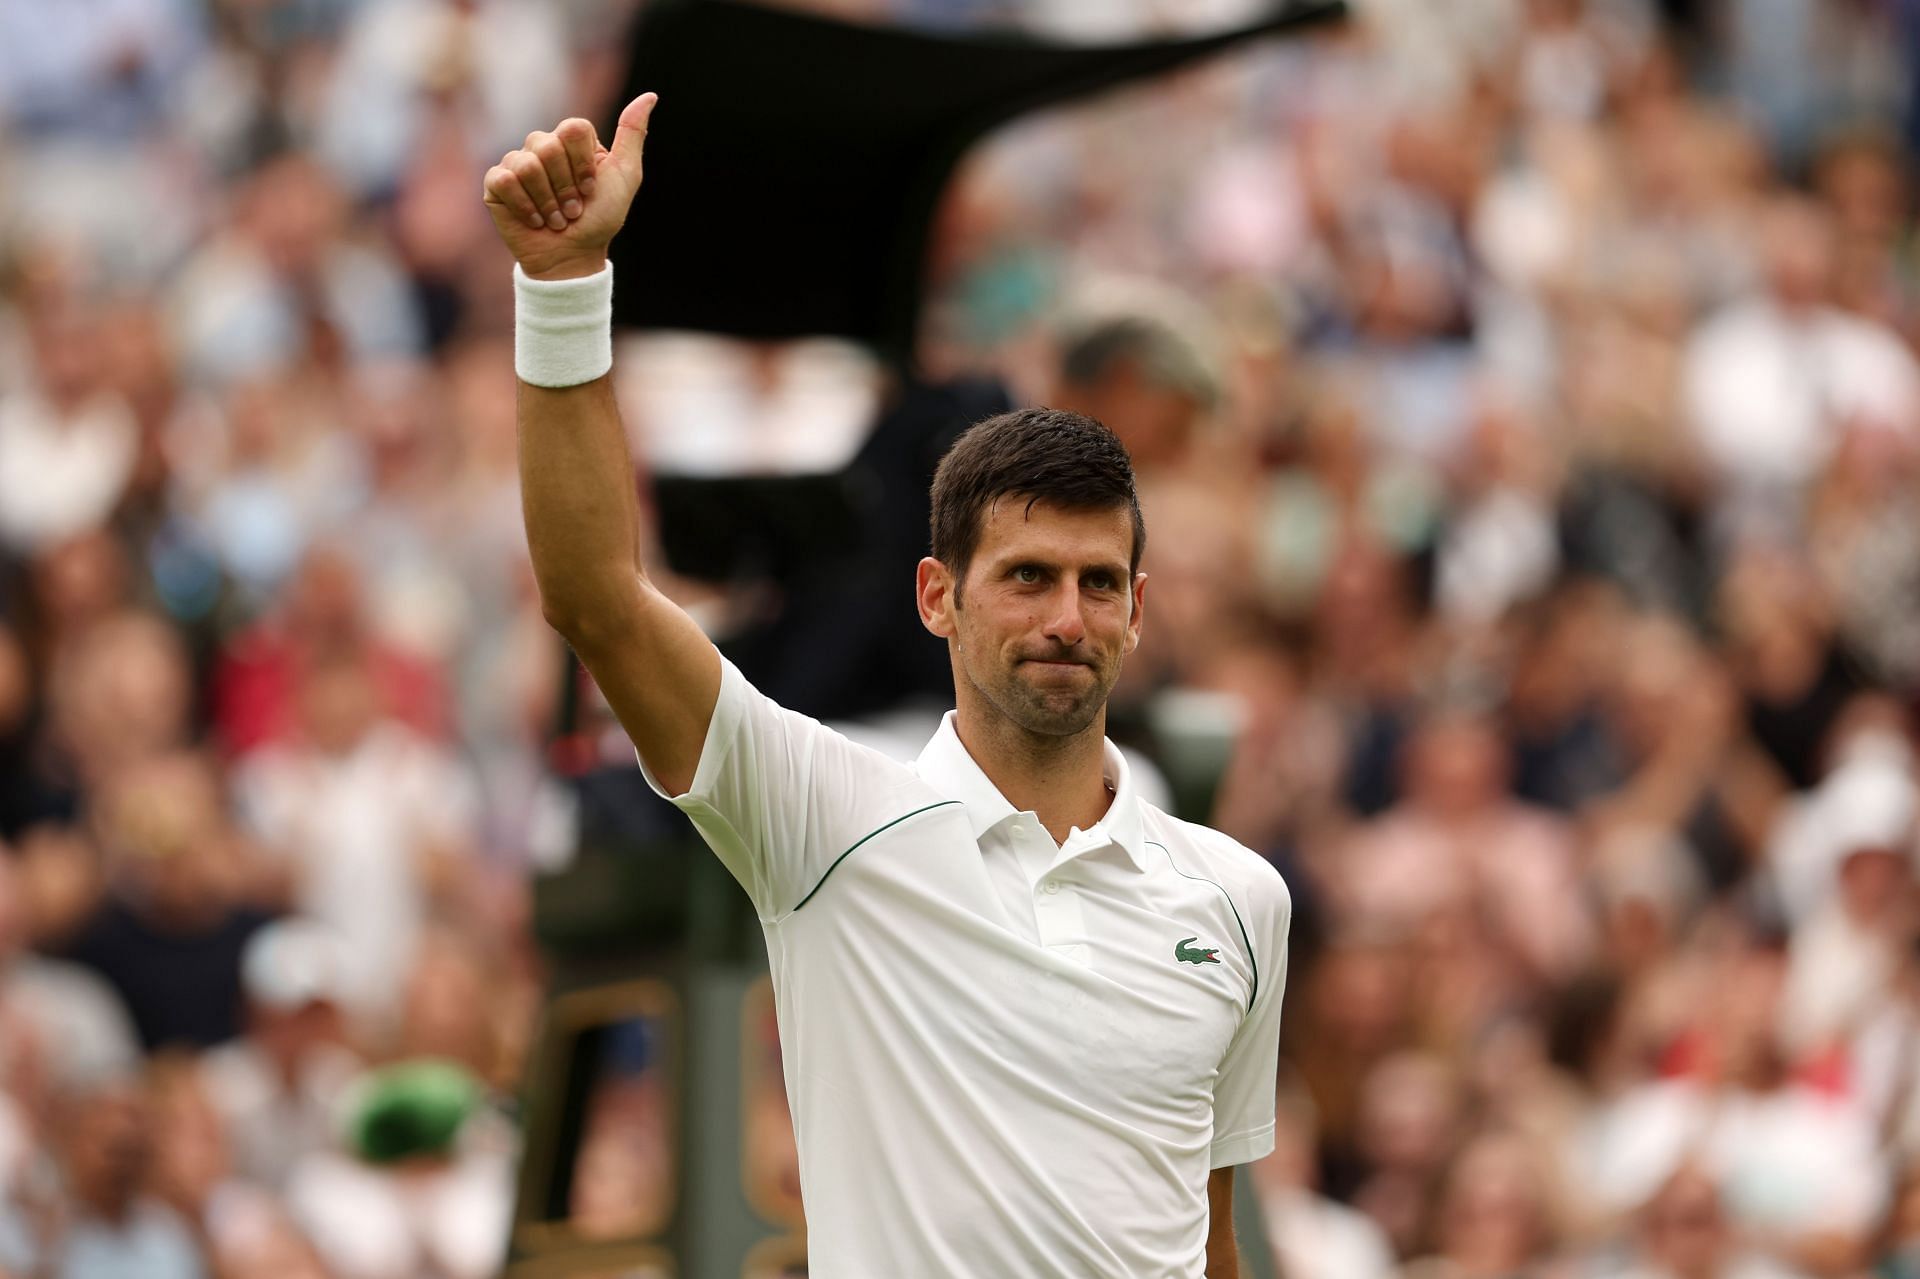 Novak Djokovic will be the favorite to reach the third round at Wimbledon